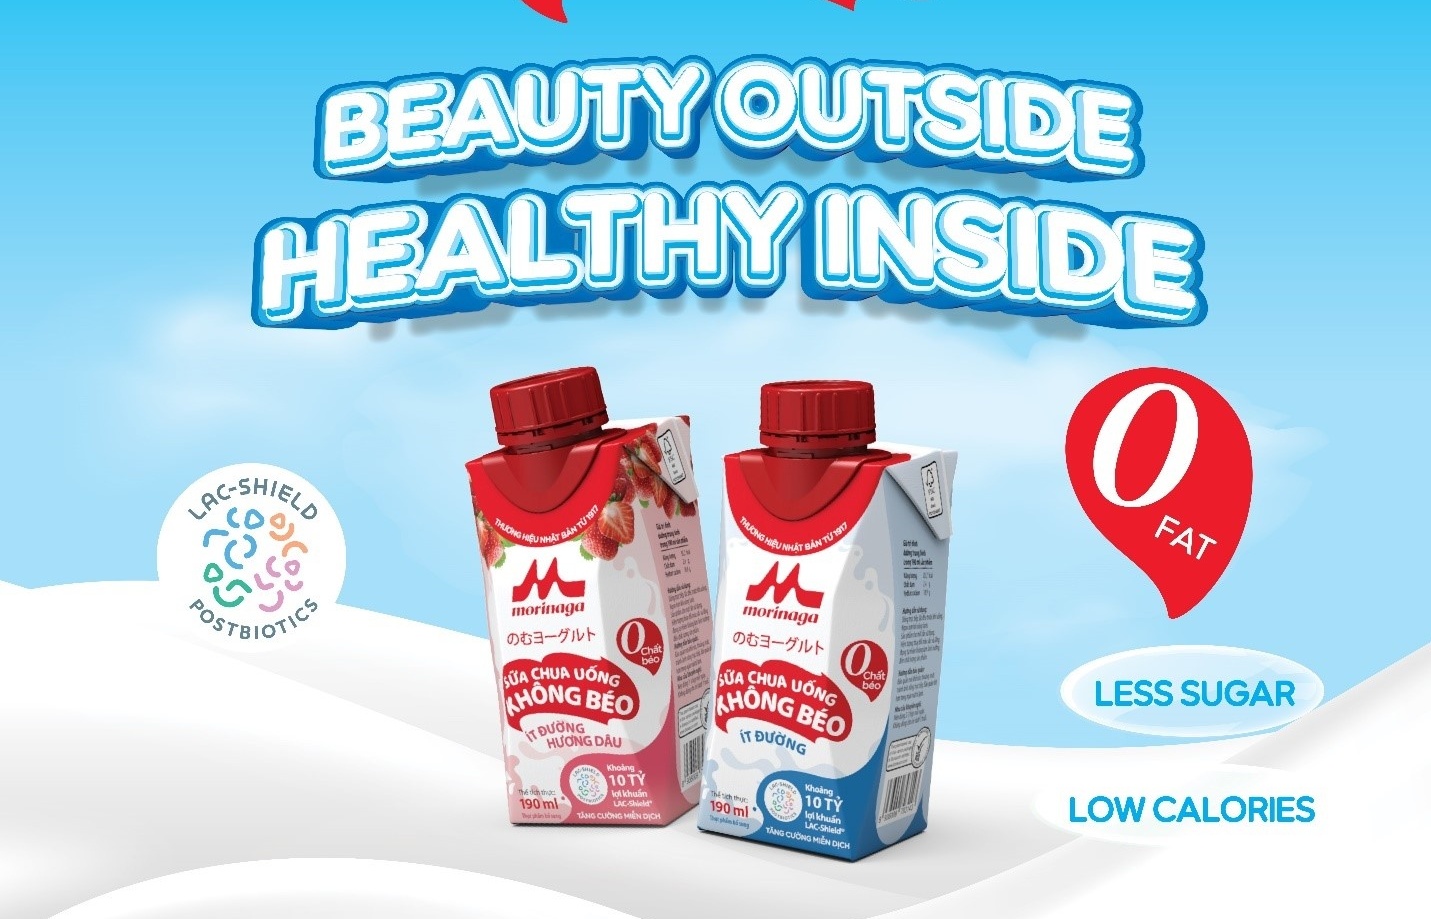 Morinaga Zero Fat Drink Yogurt launches in Vietnam